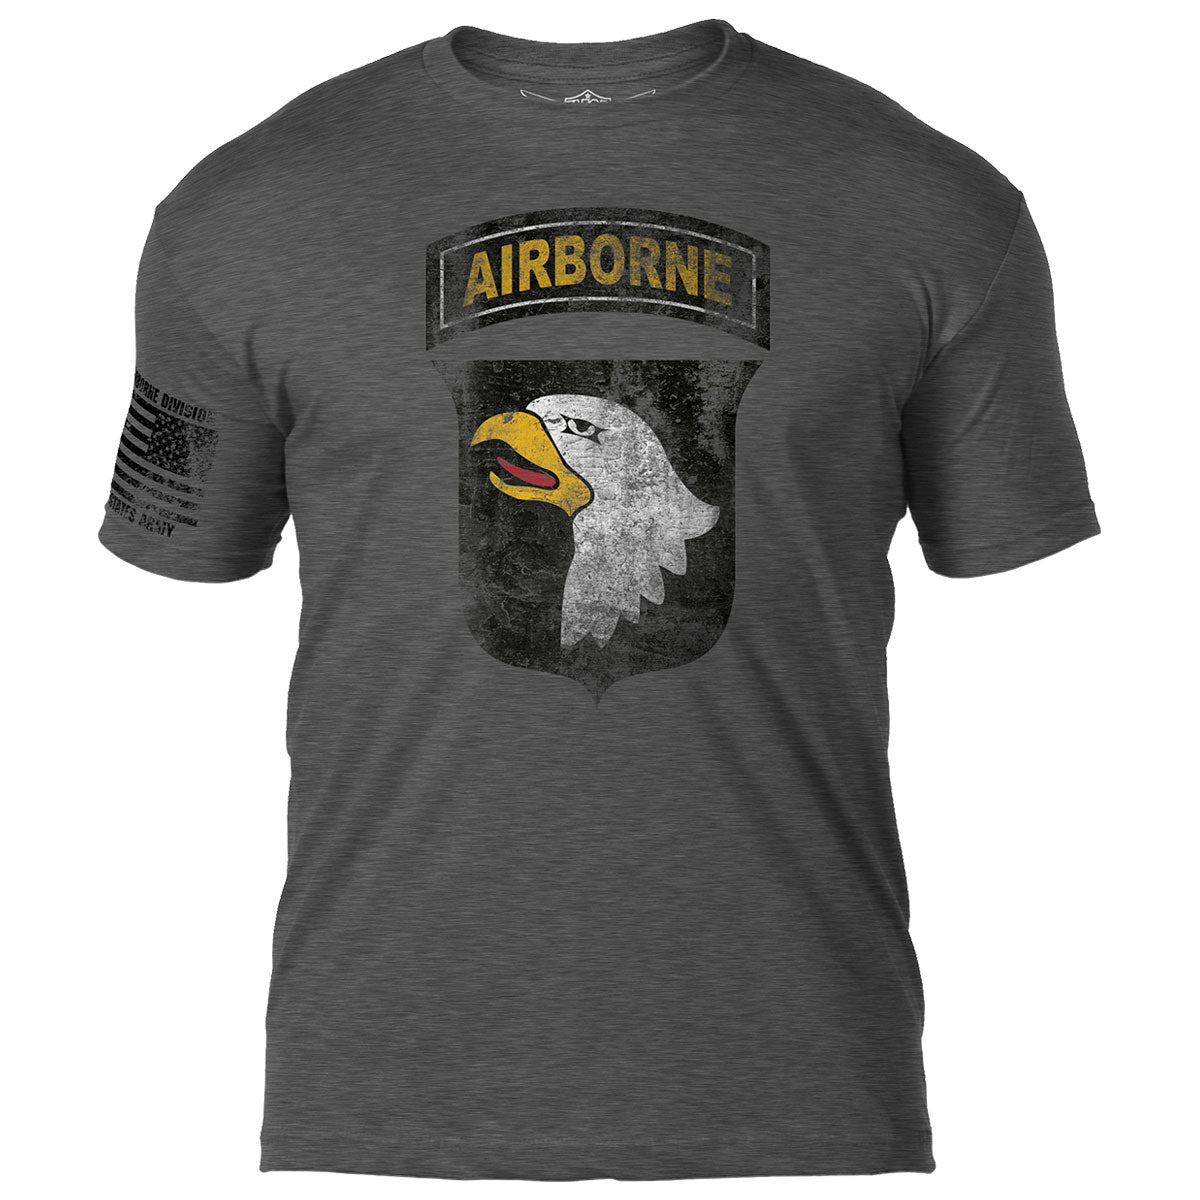 Airborne Shirts